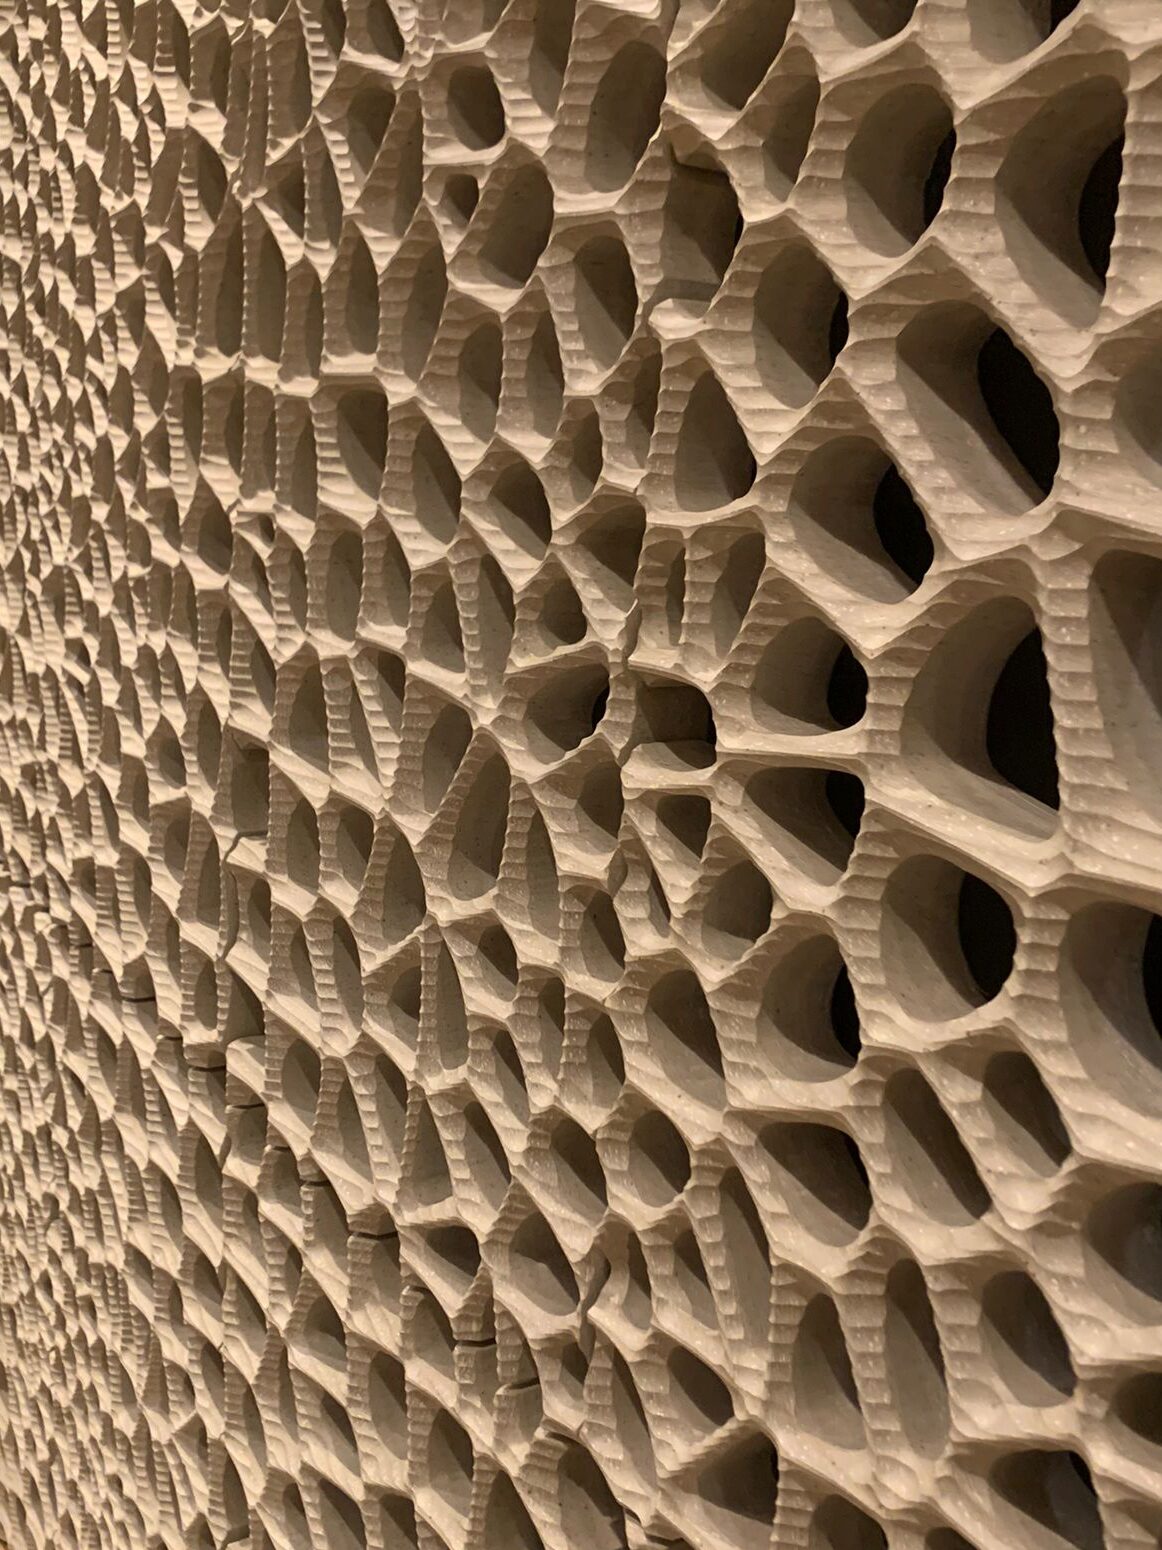 Honeycomb walls engineered for acoustics at Hamburg's Philharmonie